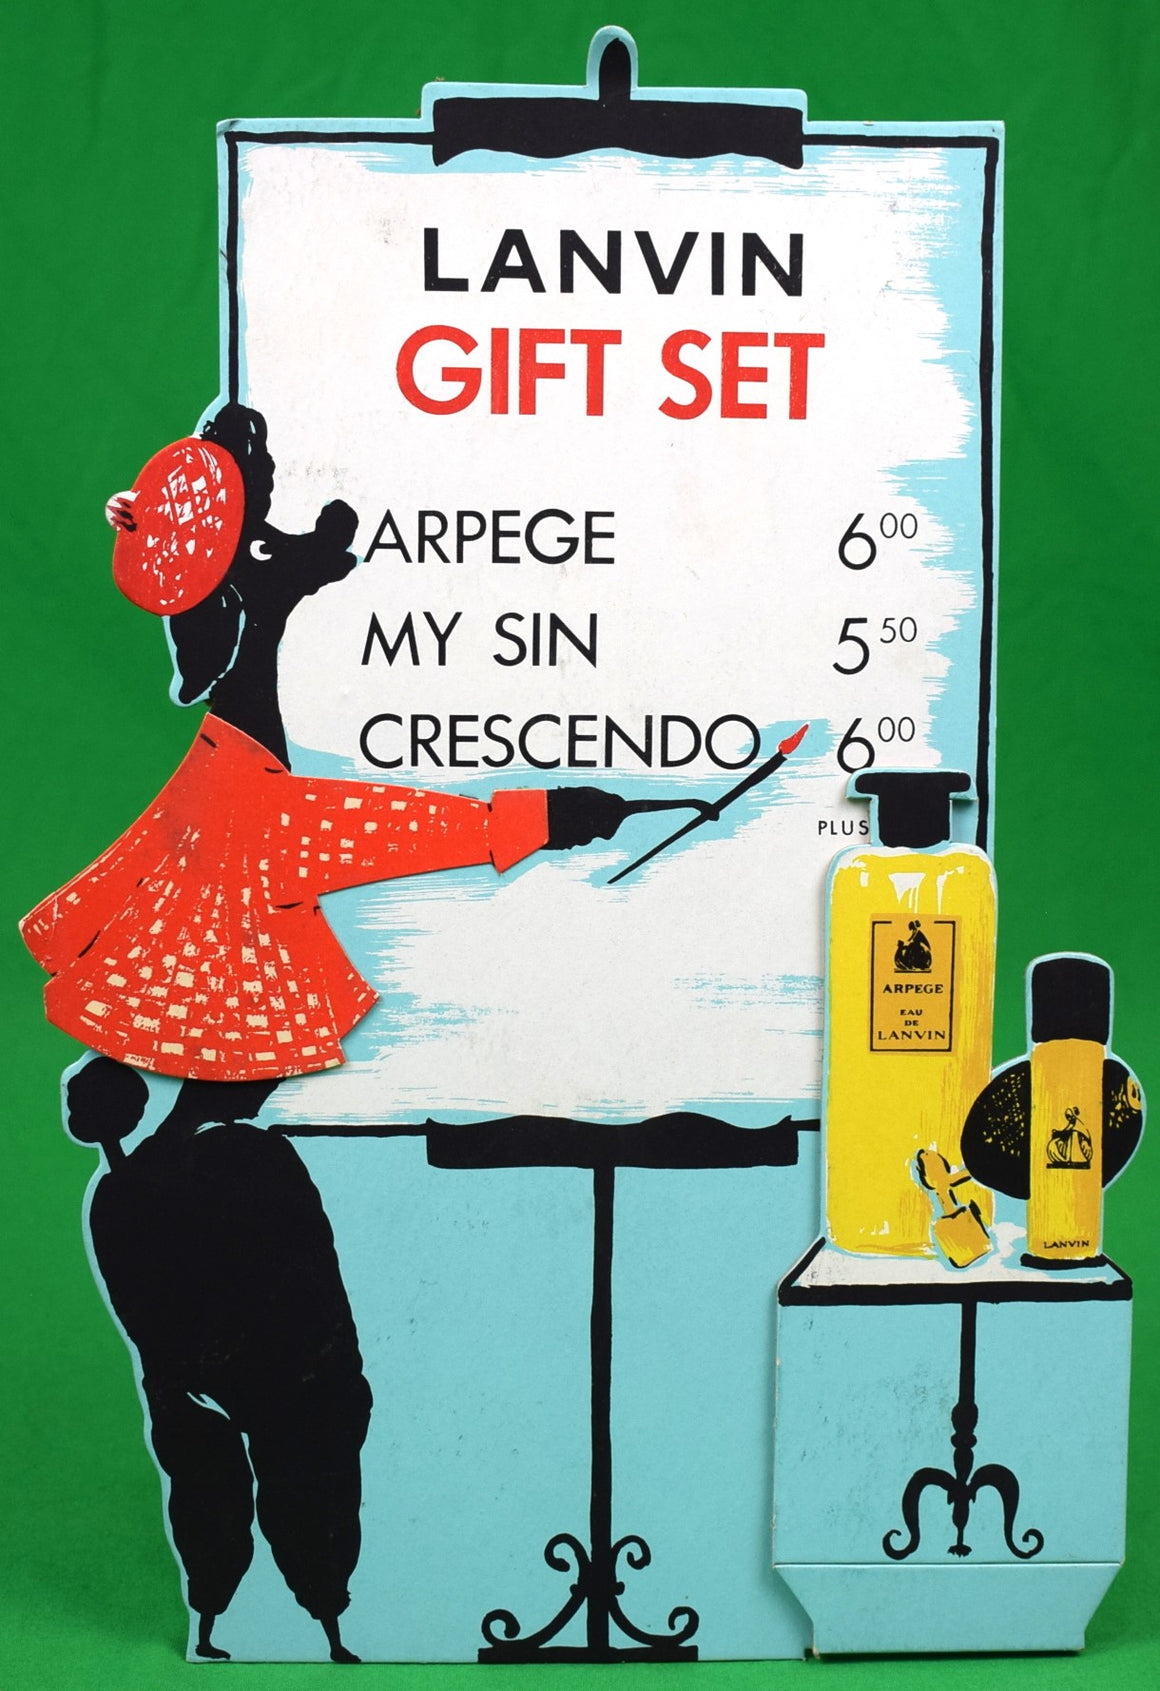 Lanvin Gift Set Arpege/ My Sin/ Crescendo w/ Black Poodle 3-D Advert Sign